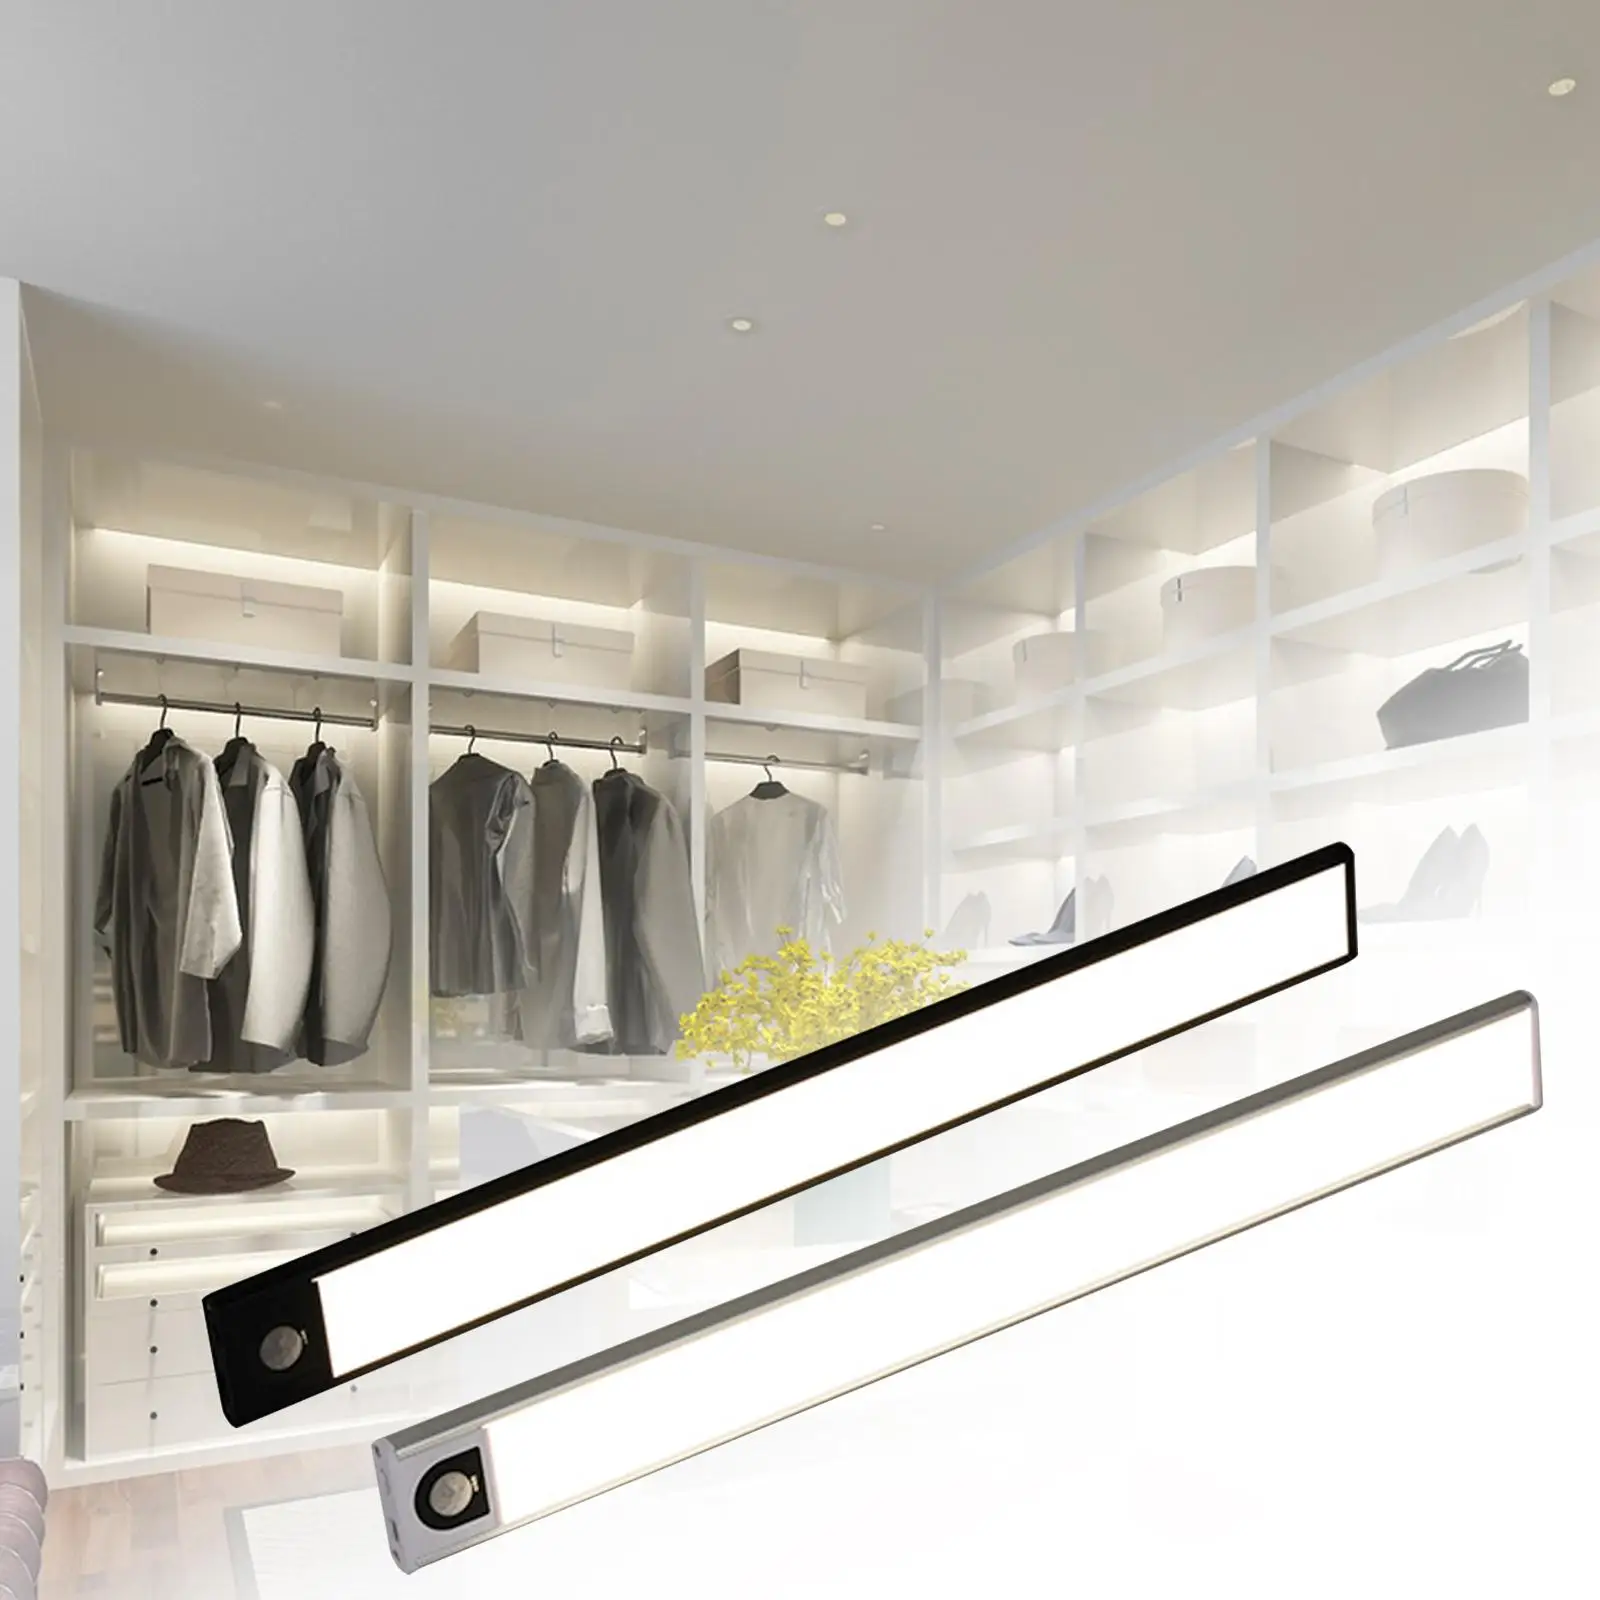 Motion Sensor Light Bar 1500mAh Rechargeable Comfortable Night Lighting for Corridors Wardrobe Hotel Rooms Workshops Bedrooms